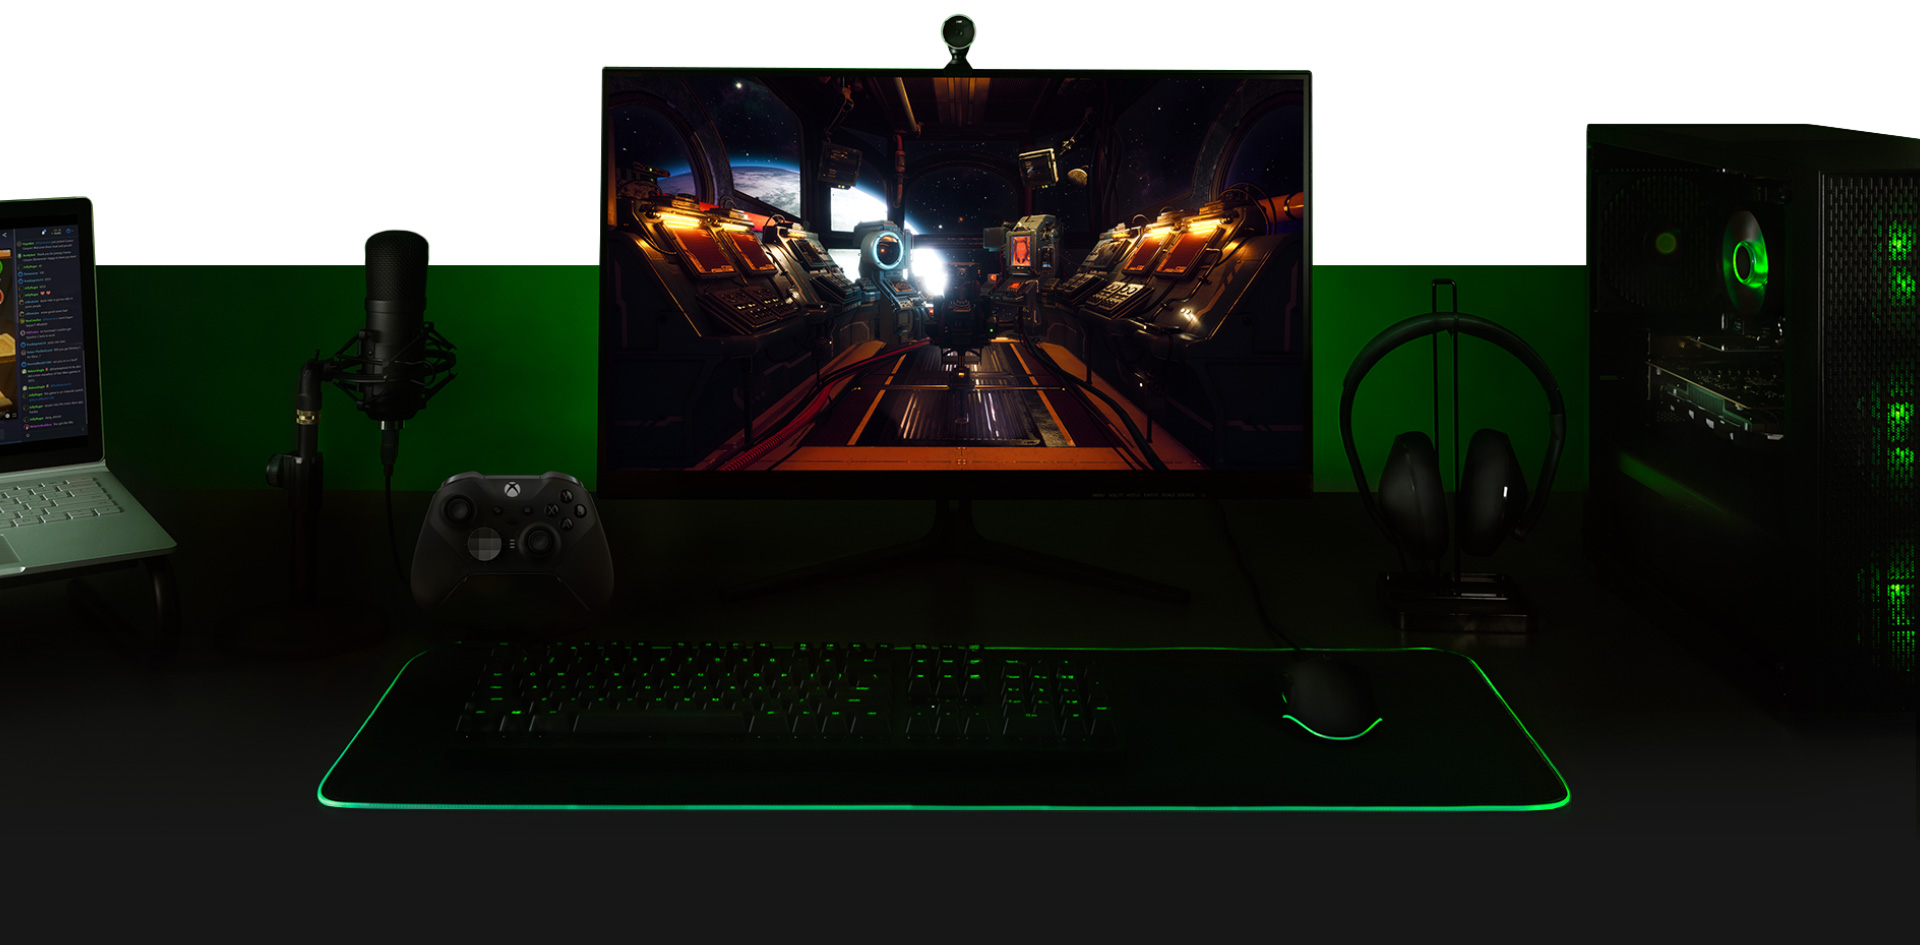 ПК, монітор з зображенням гри The Outer Worlds, клавіатура, геймпад Xbox One, мікрофон і ноутбук, налаштовані разом на столі.